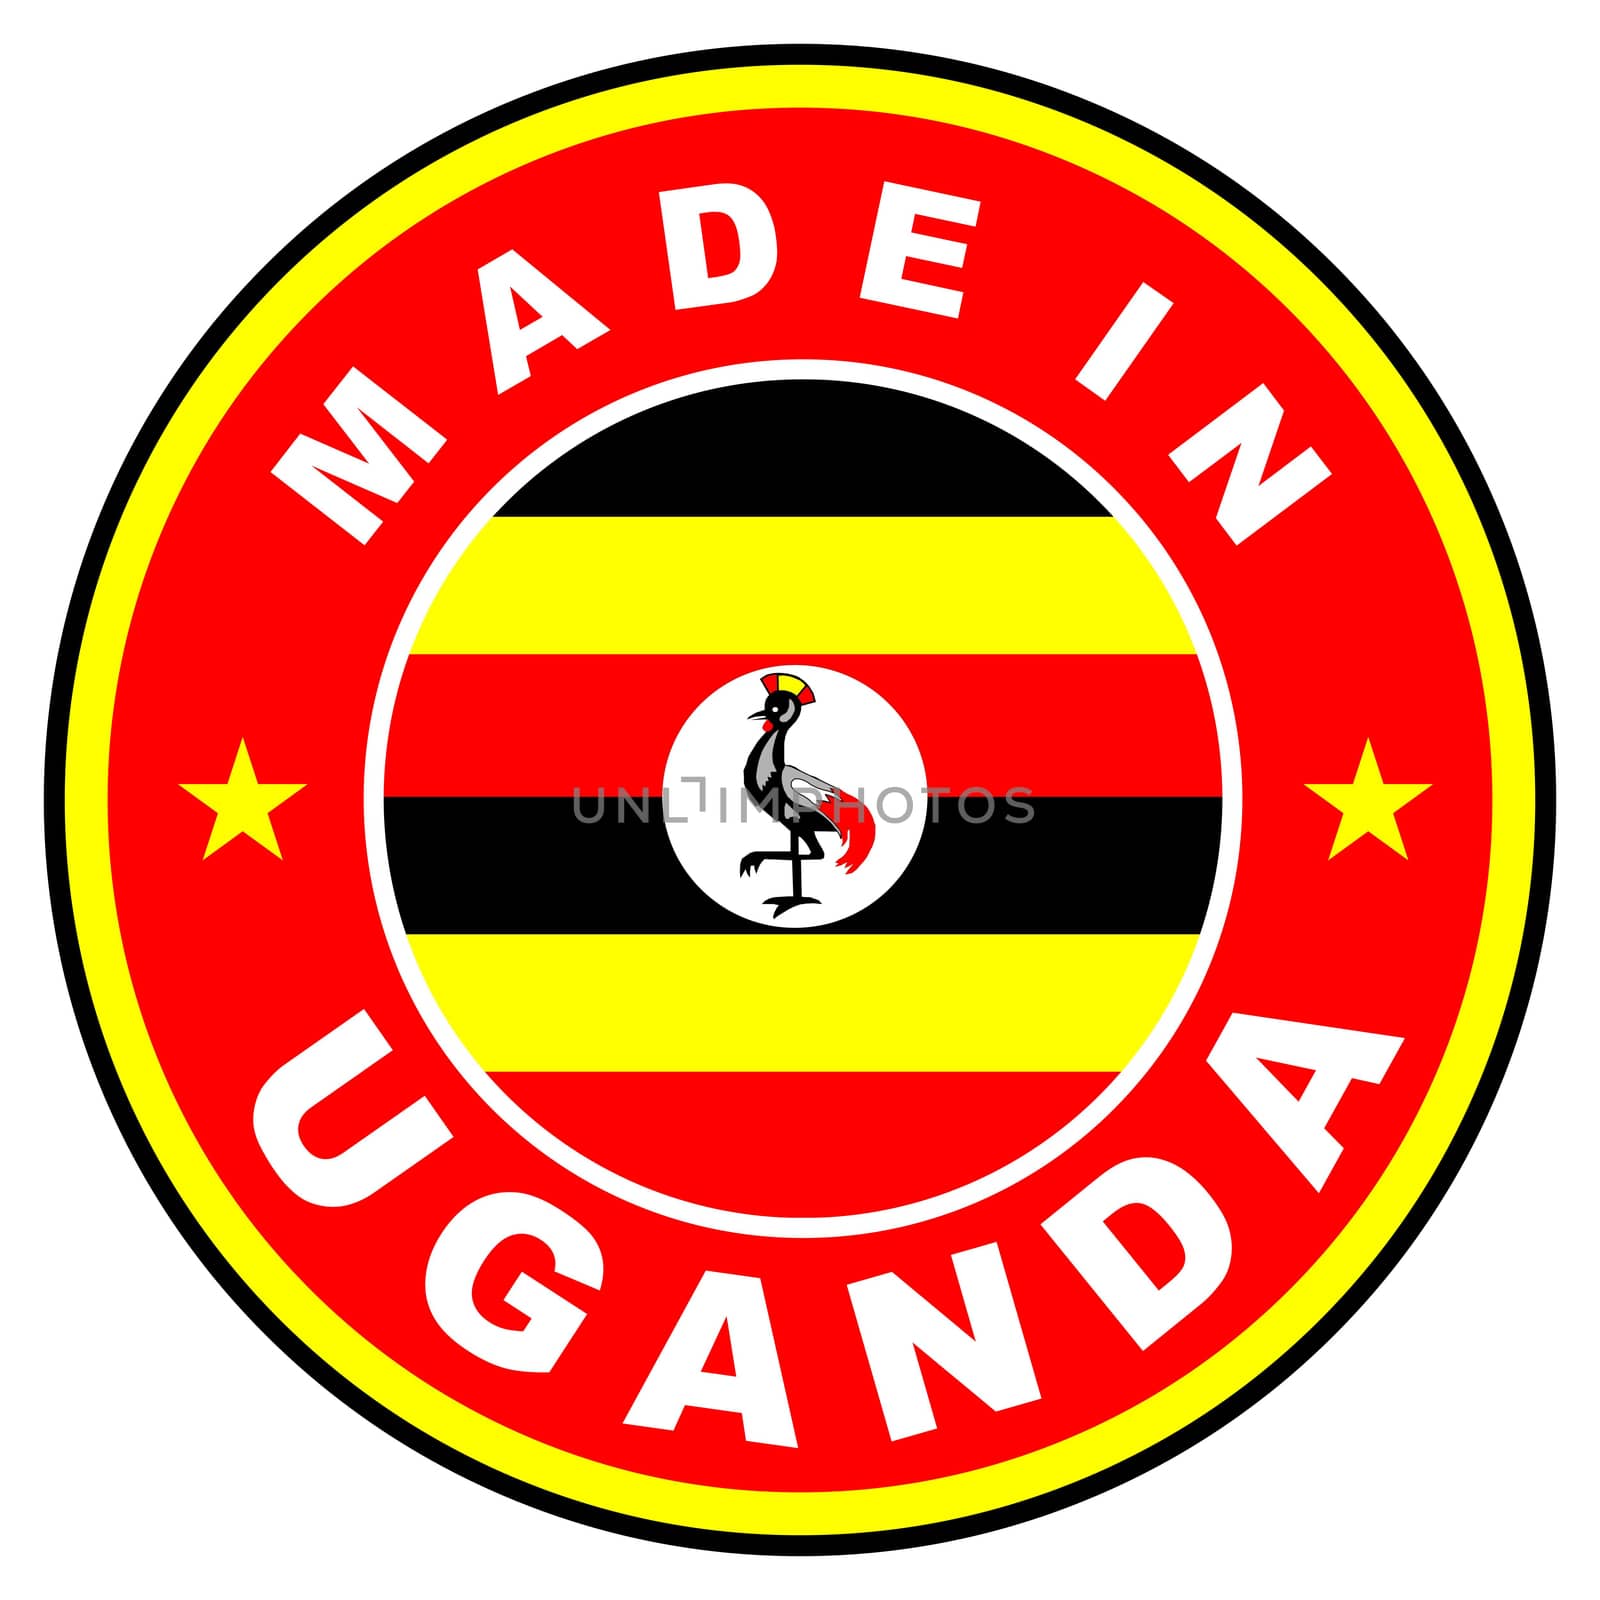 made in uganda by tony4urban